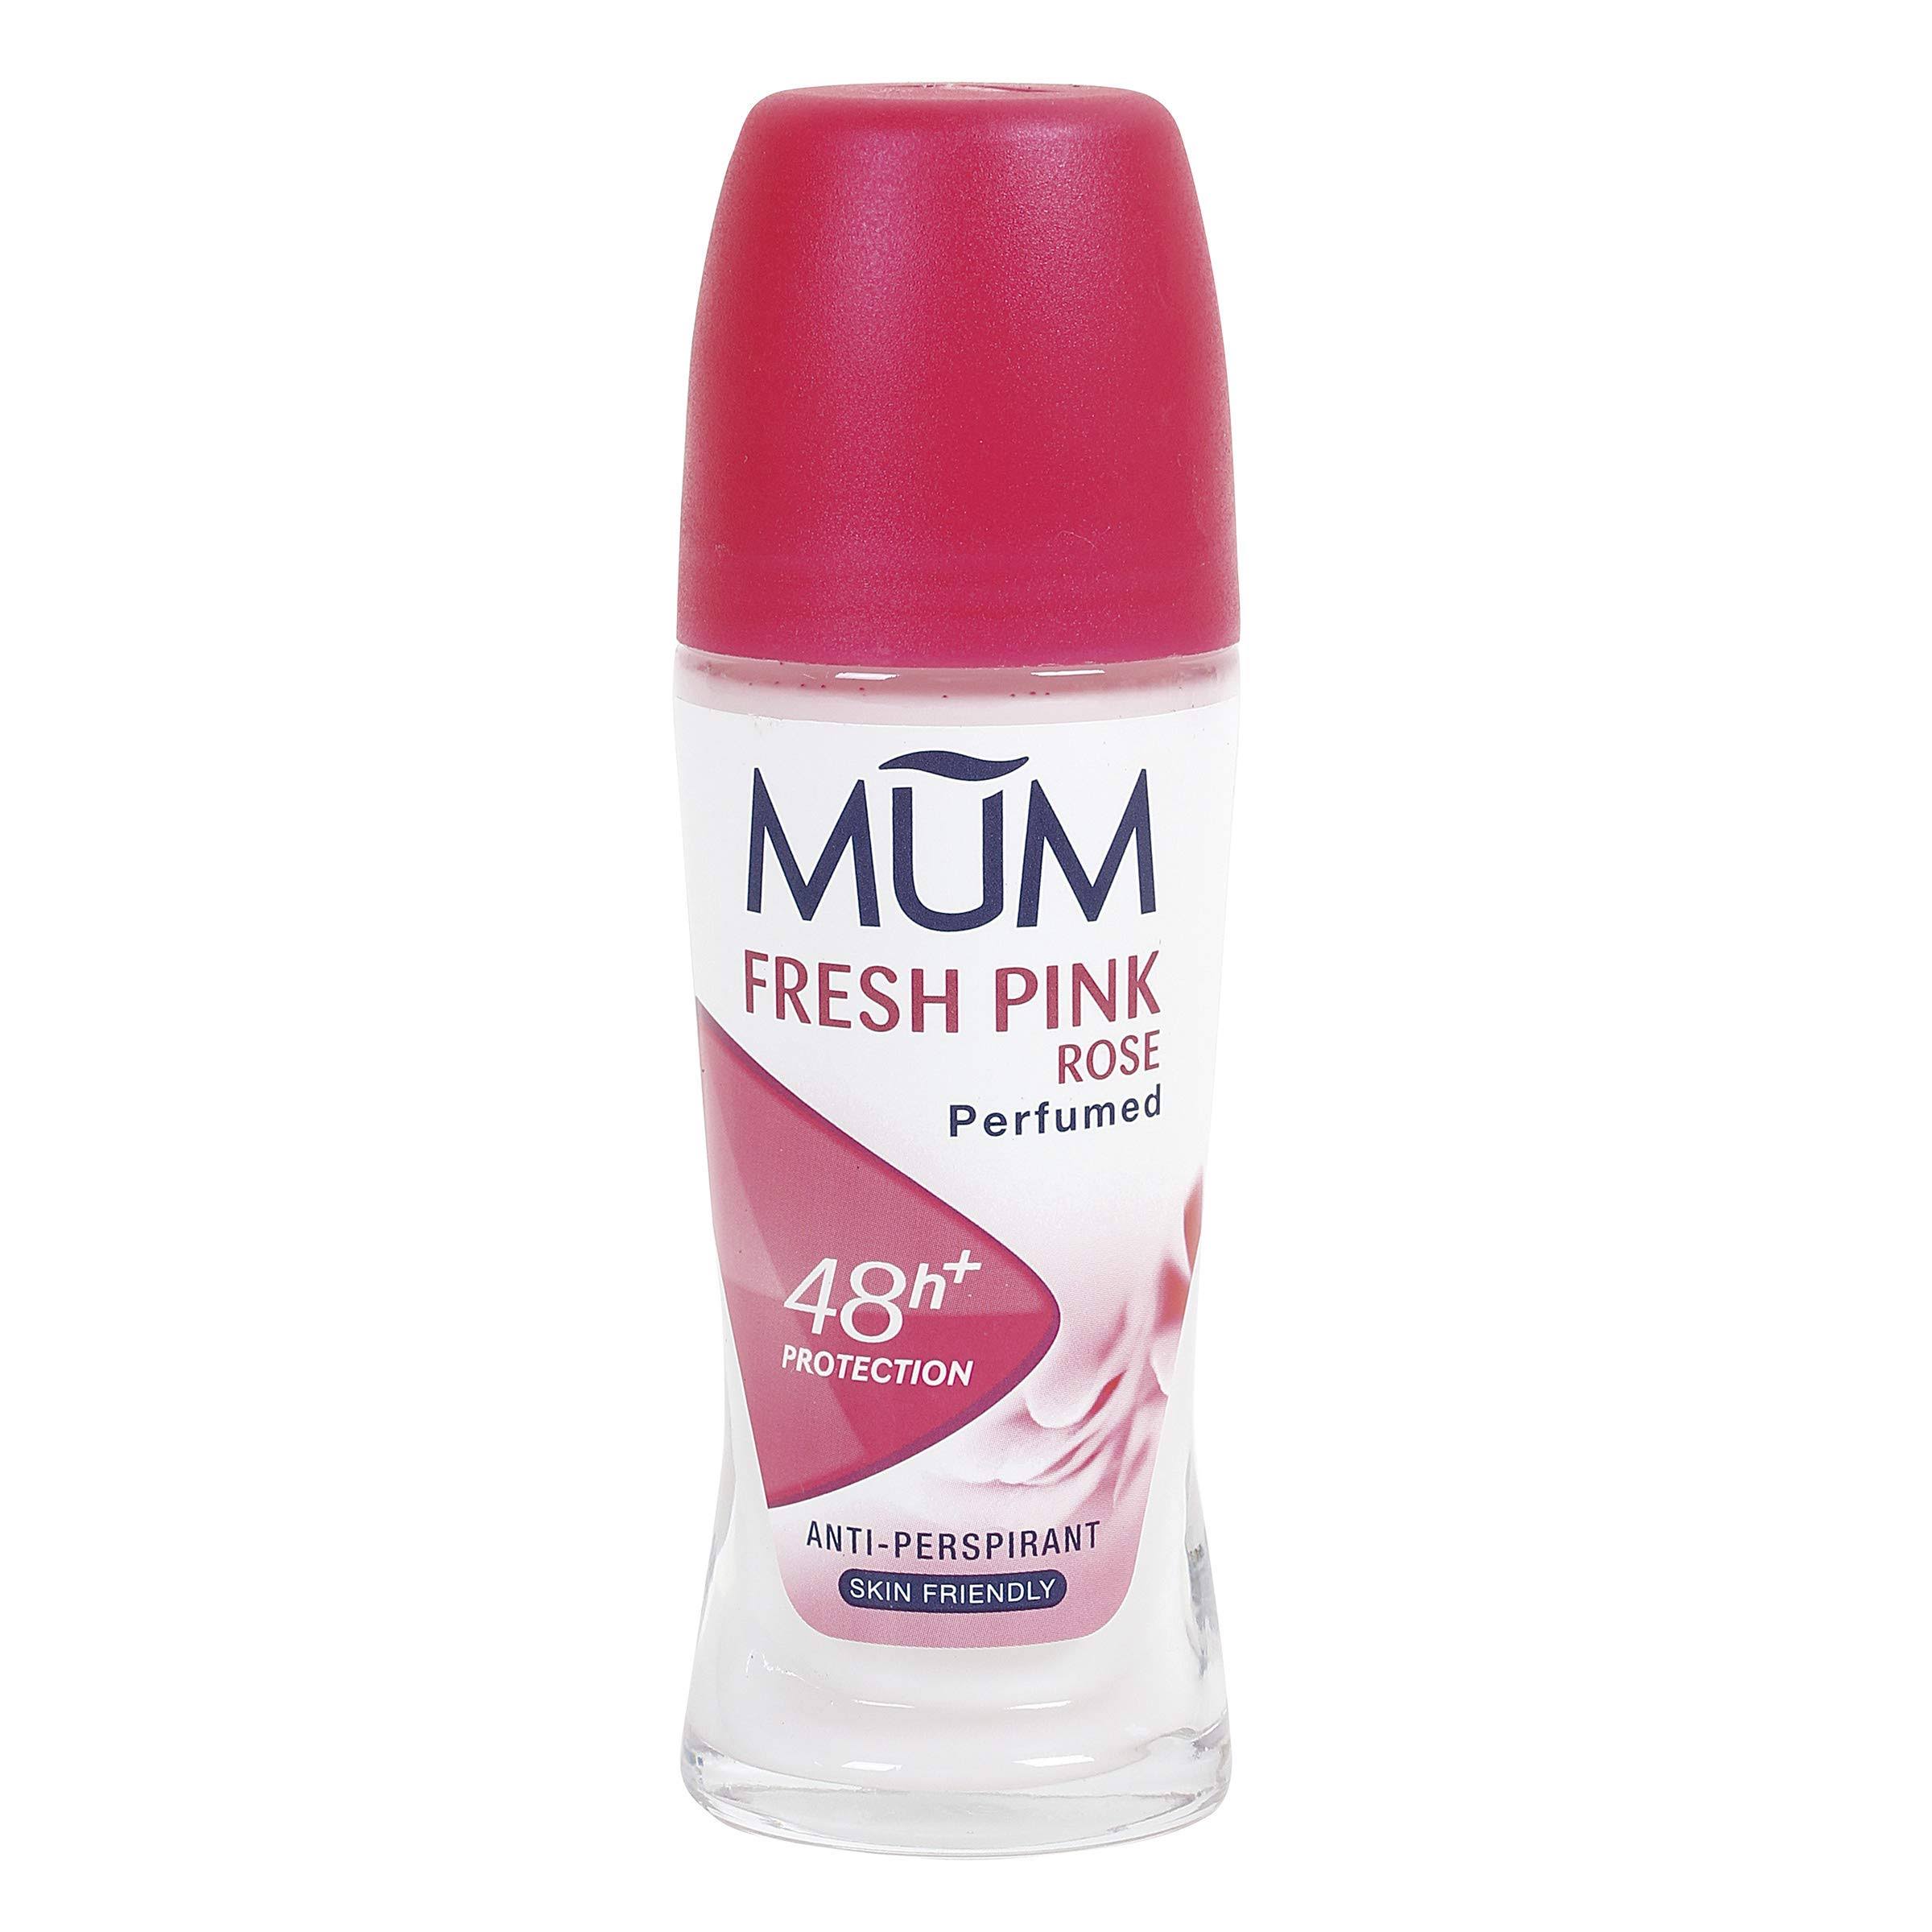 Mum 48h+ Protection Anti-Perspirant - Fresh Pink Rose, 50ml